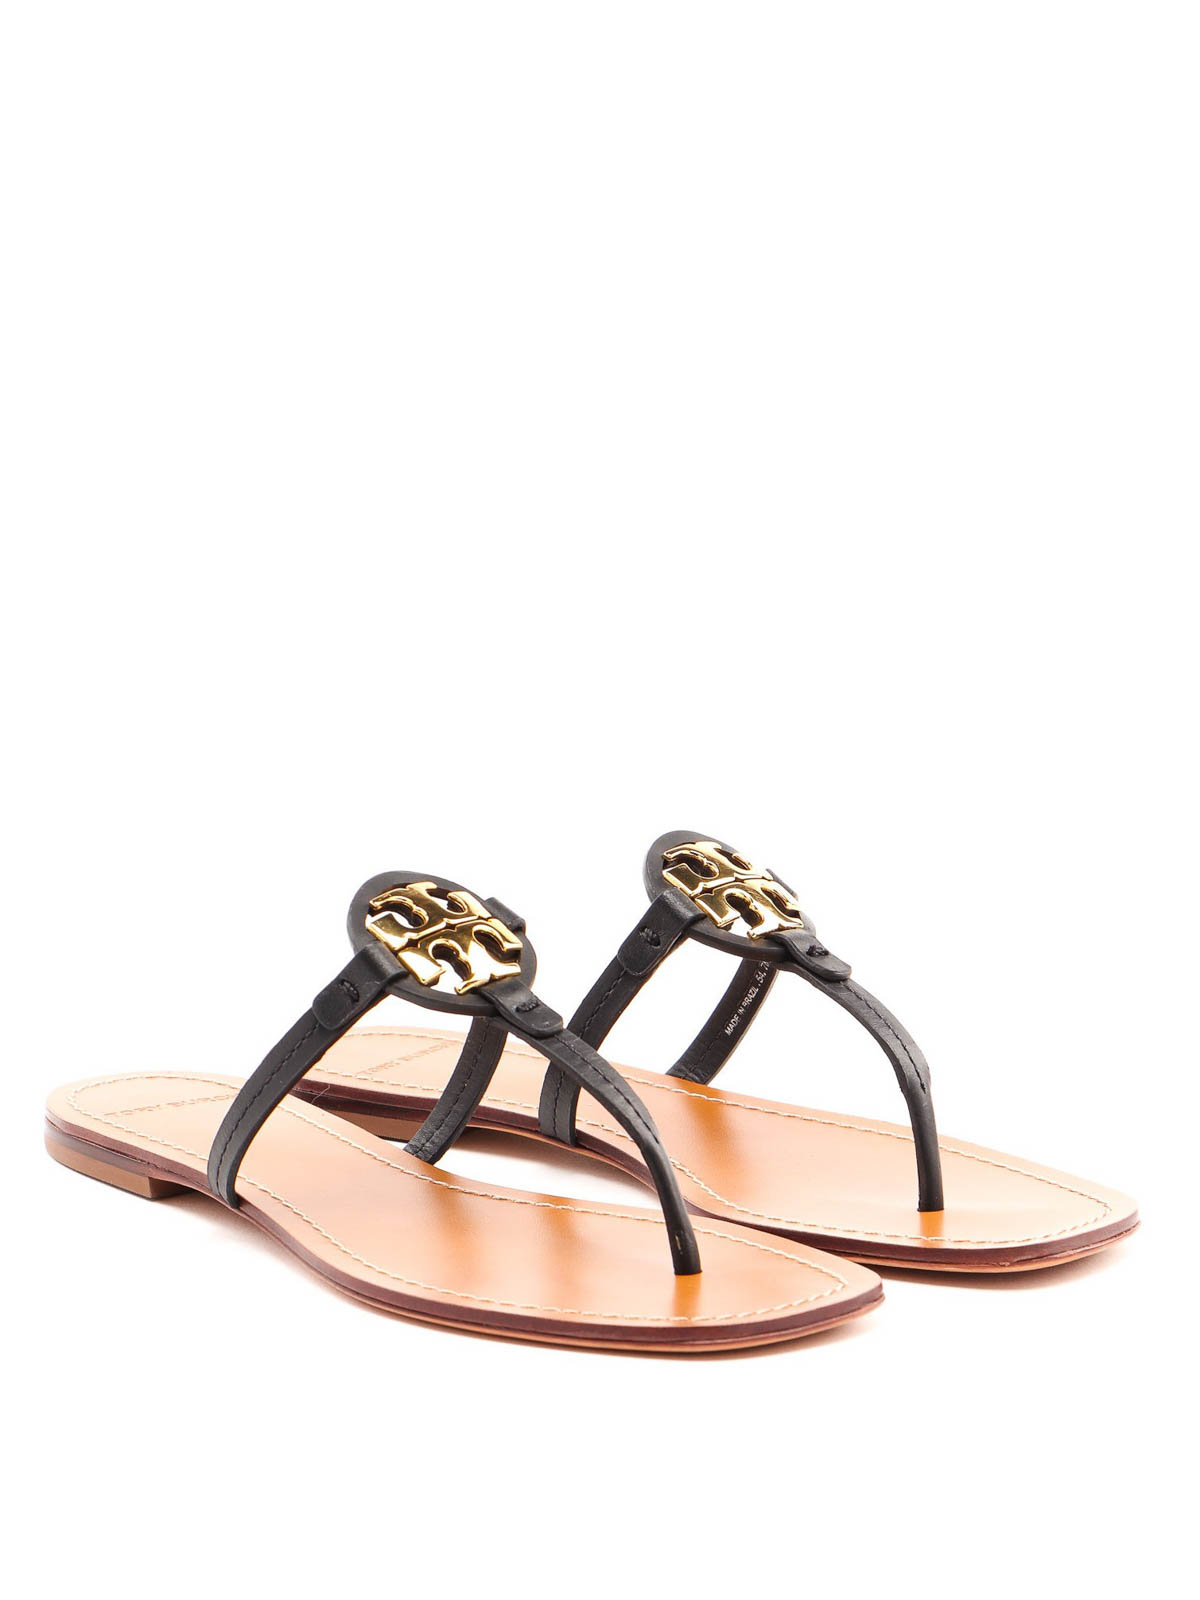 Sandals Tory Burch - Mini Miller thong sandals - 57831006 